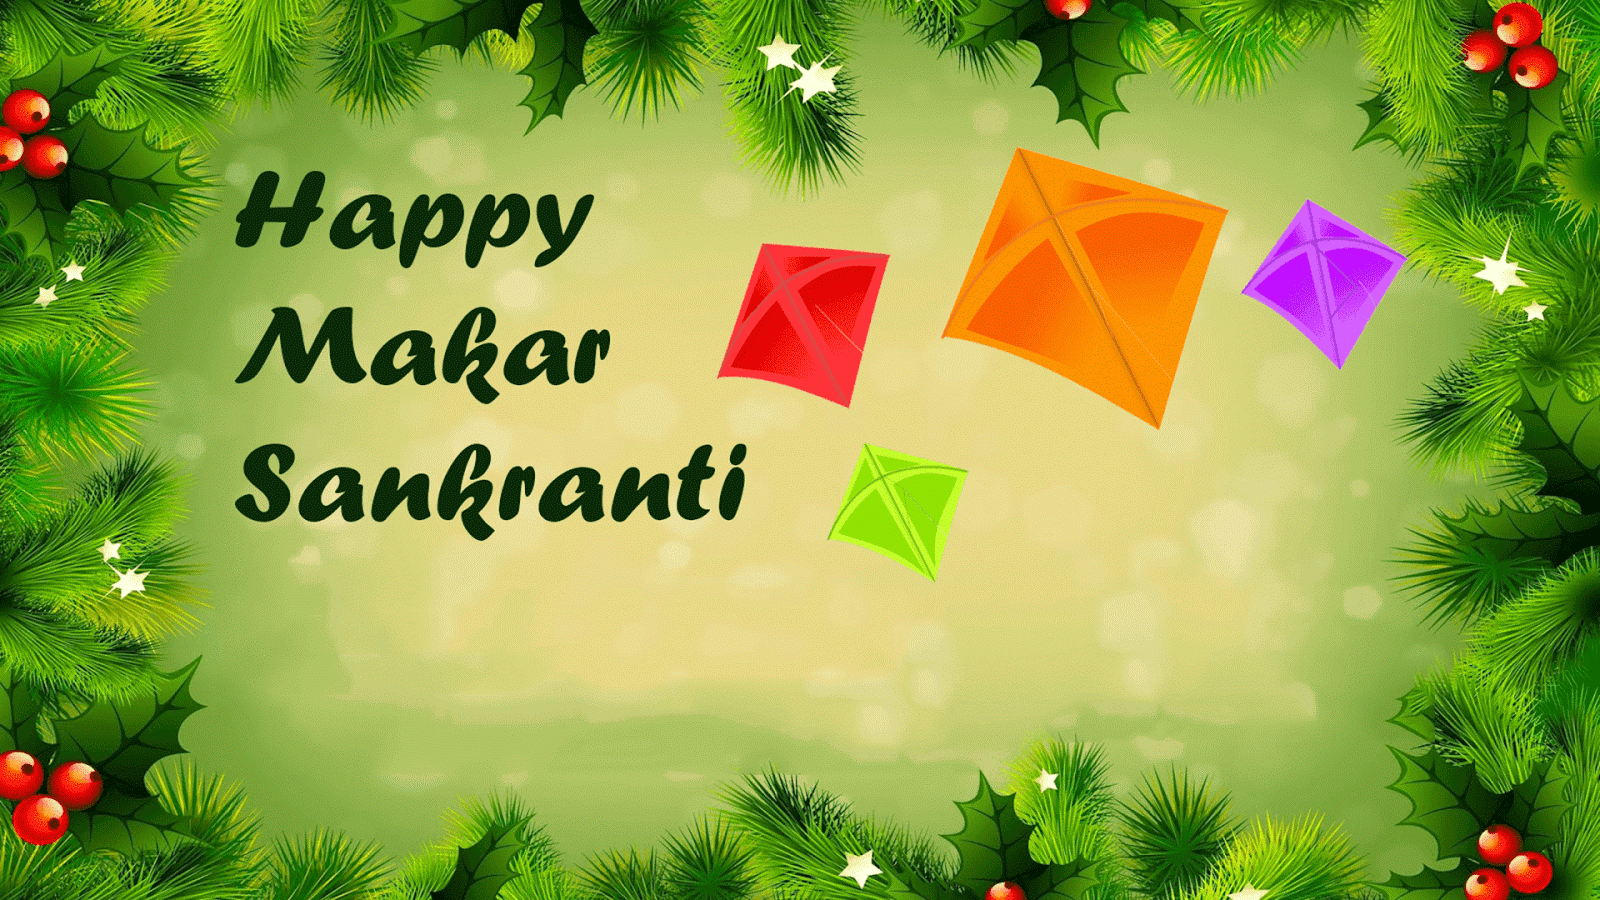 Happy Makar Sankranti Wallpapers HD Download Free 1080p